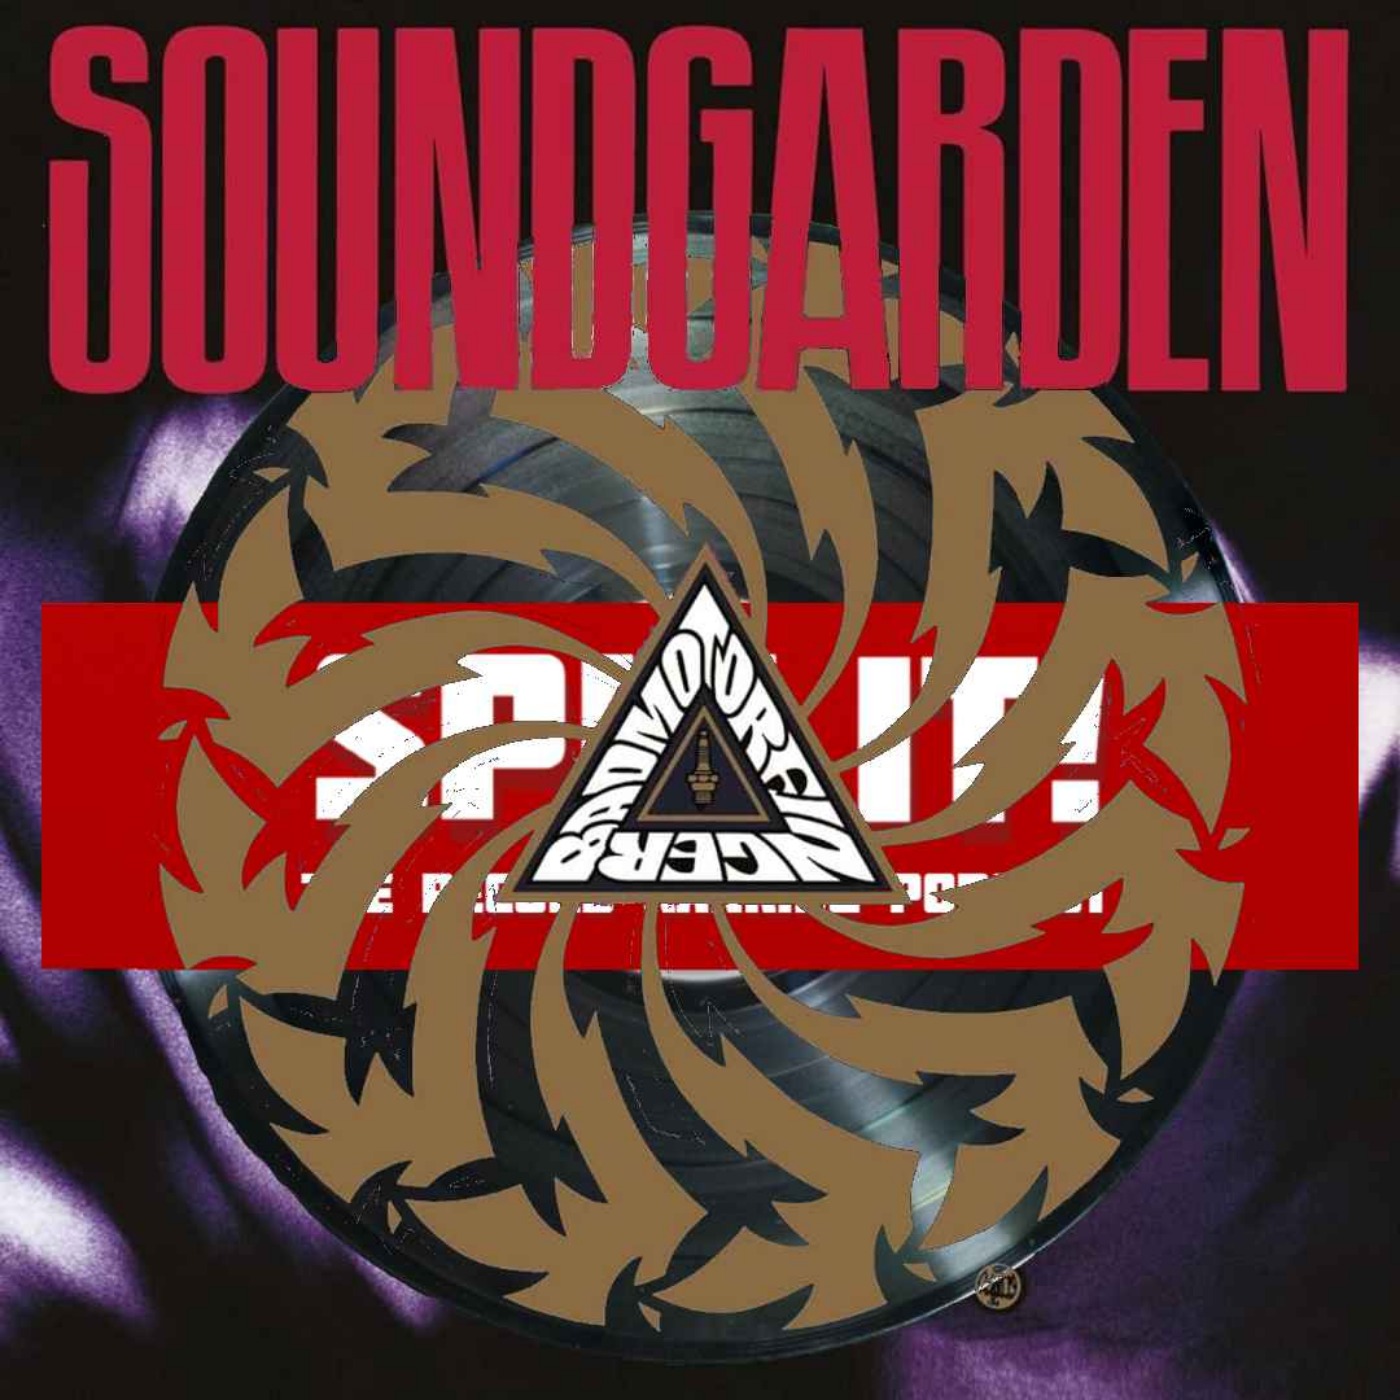 Badmotorfinger - Soundgarden: Episode 144